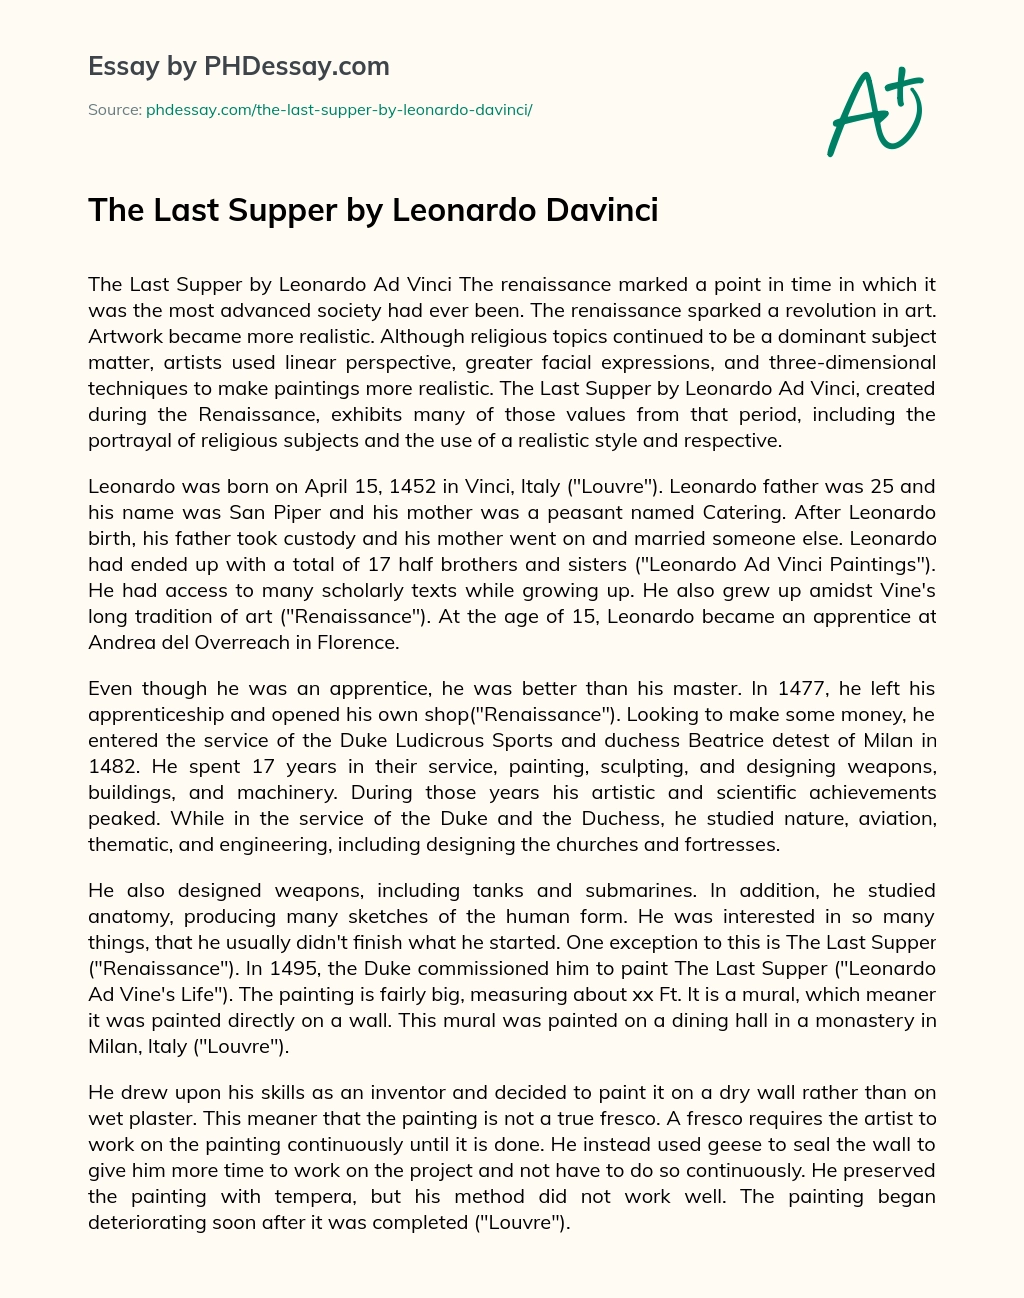 The Last Supper by Leonardo Davinci essay